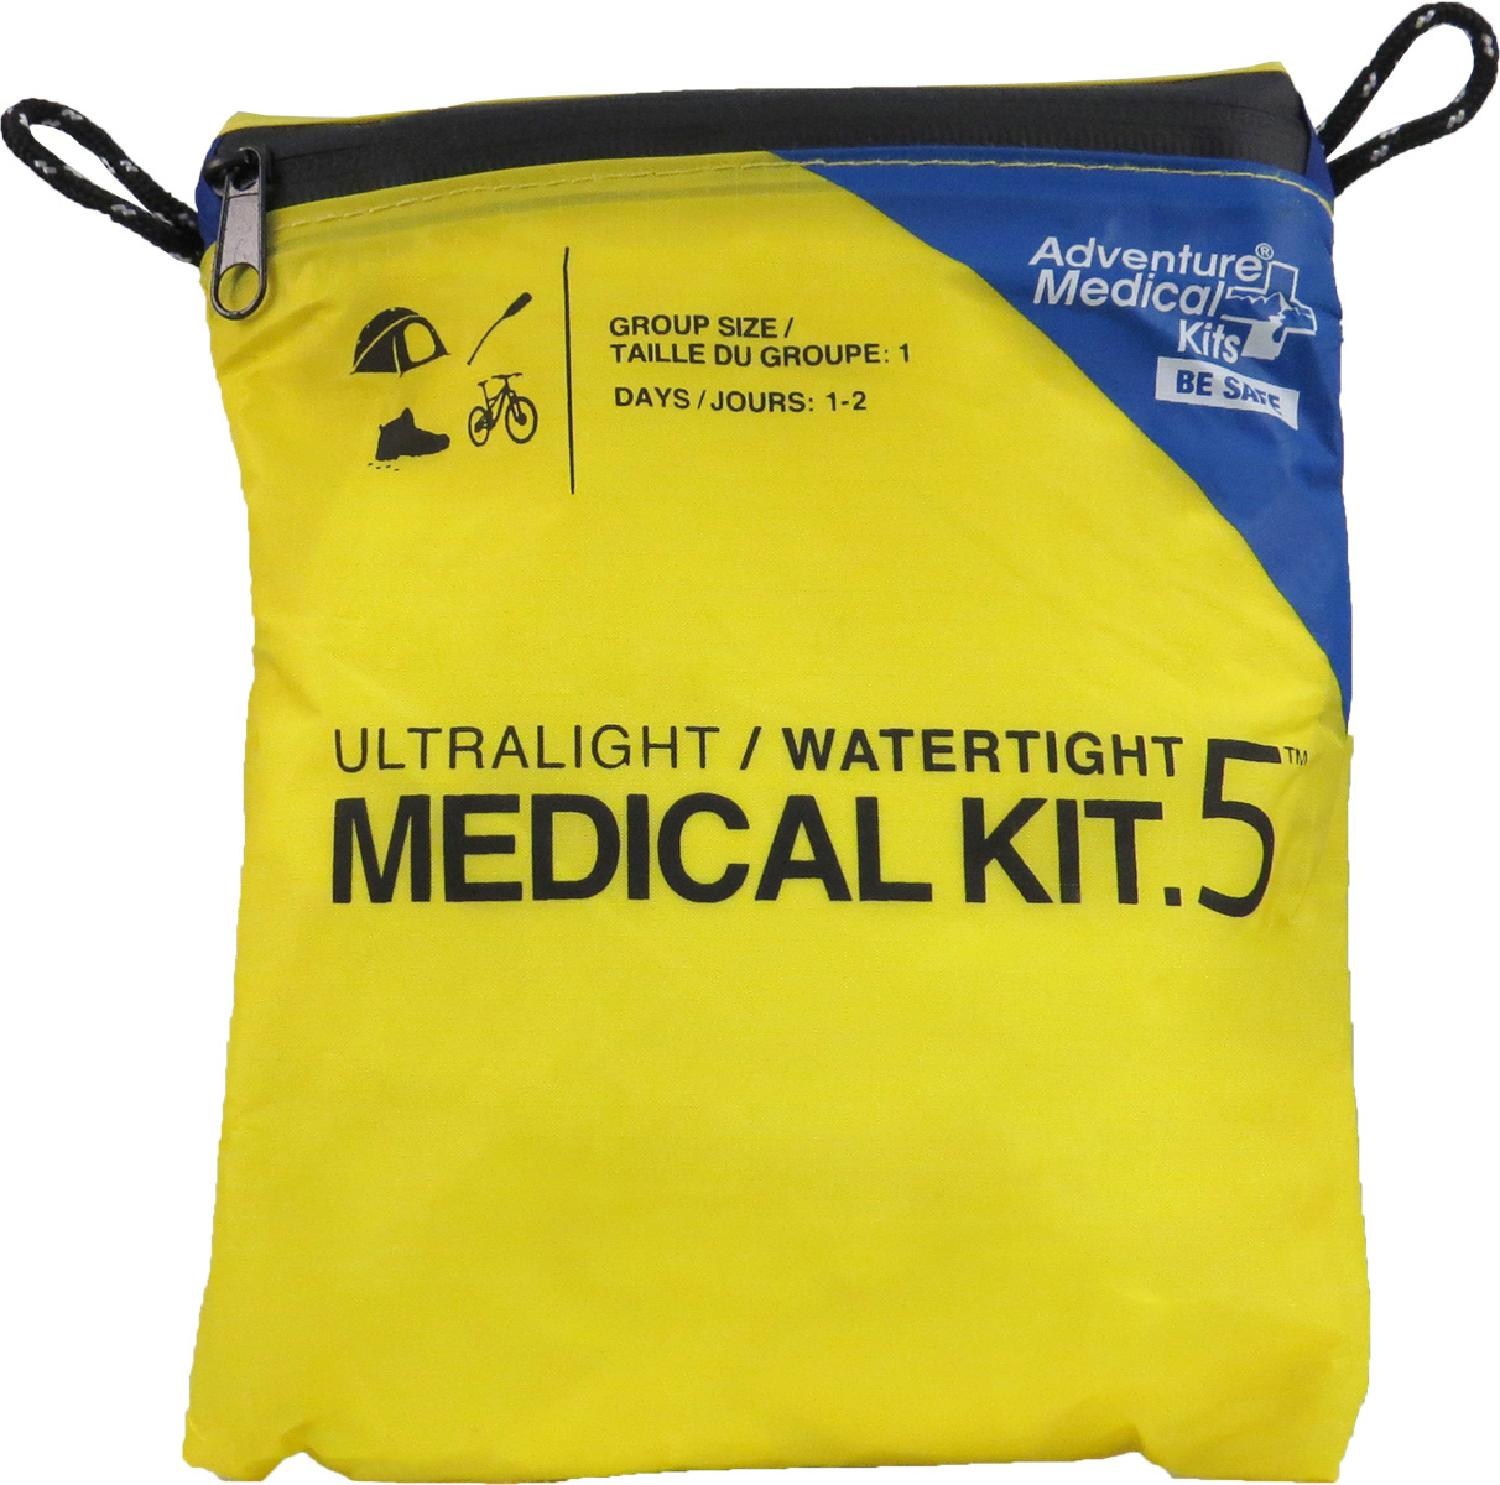 Сверхлегкая/водонепроницаемая медицинская аптечка калибра .5 Adventure Medical Kits quikclot trauma pack pro жгут quikclot adventure medical kits цвет one color